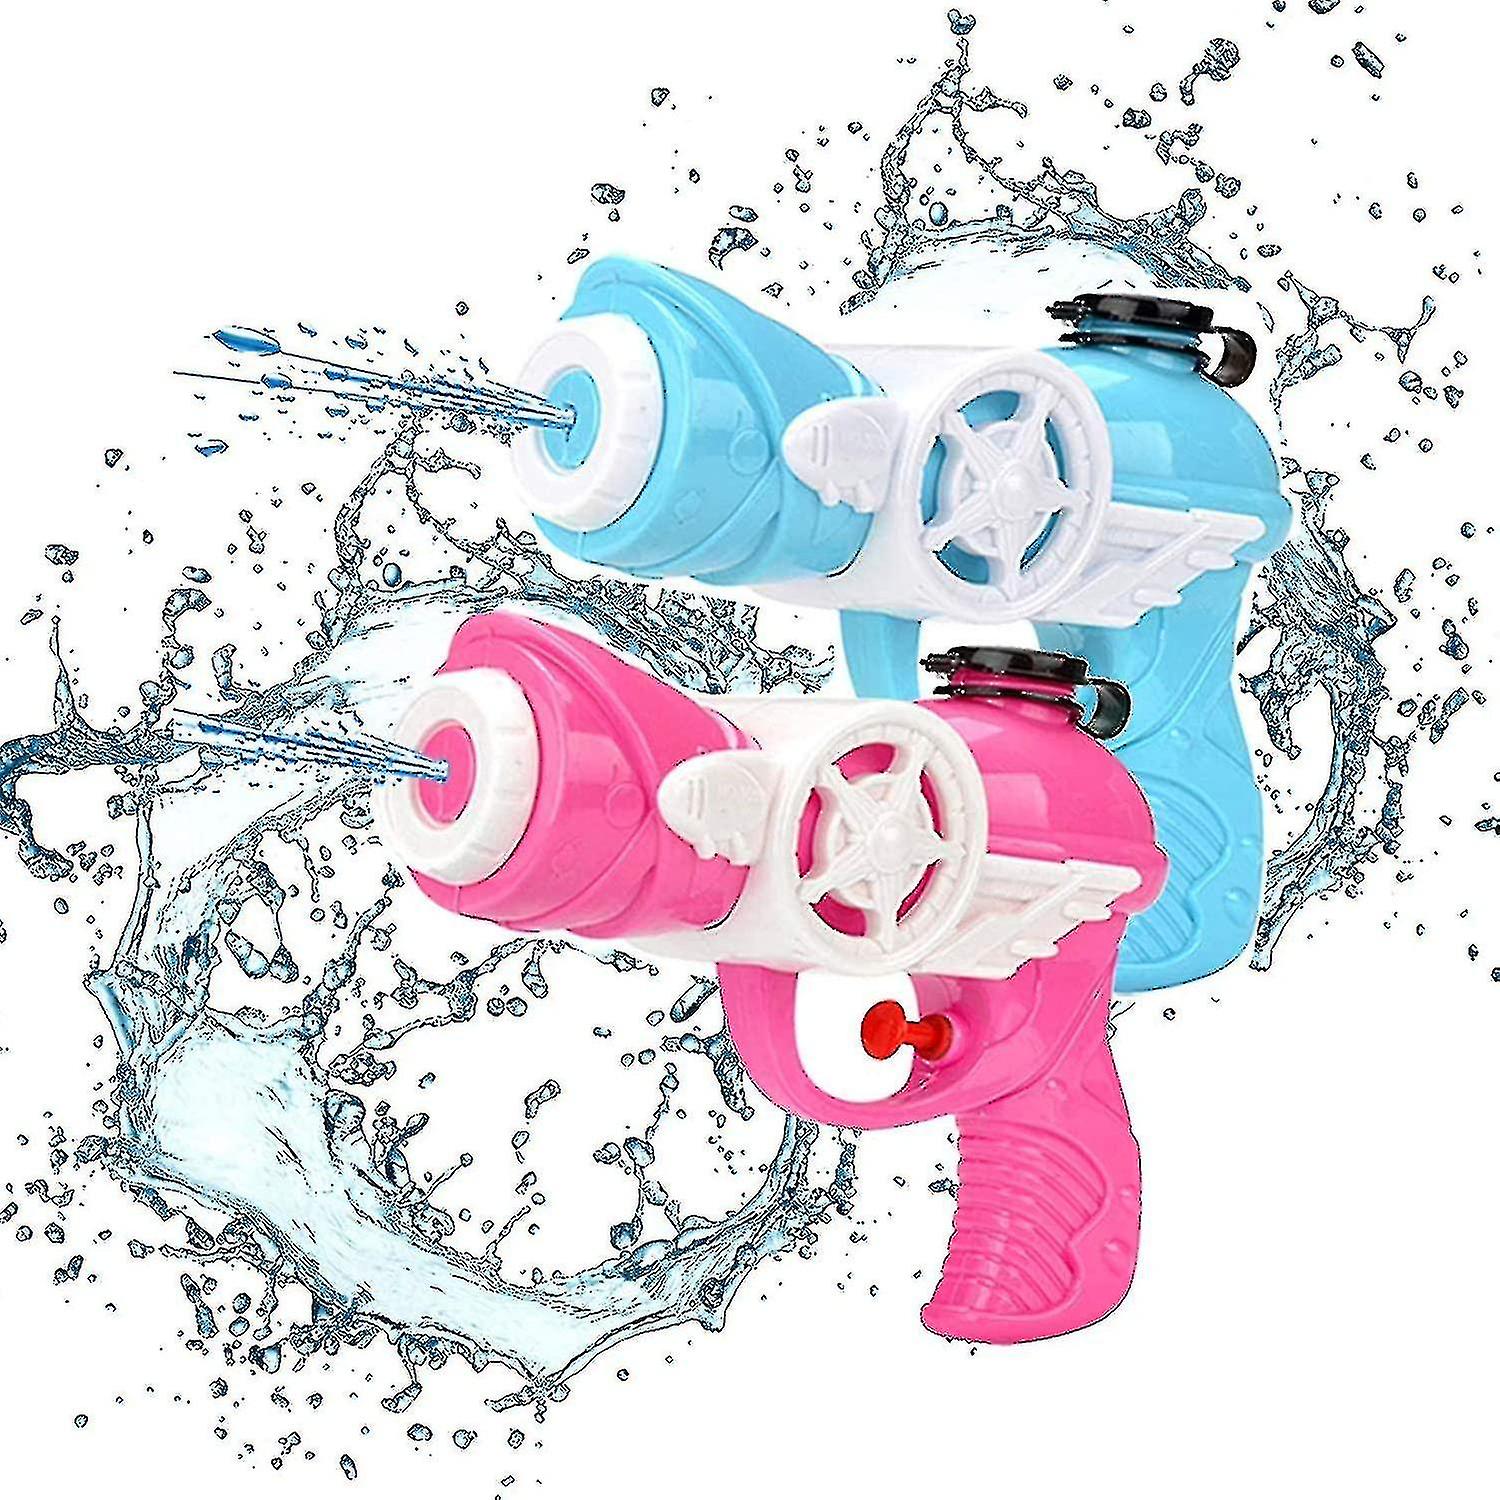 Sajy Water Gun Small， Water Gun Set， Water Gun Toy， Water Gun For Adult Kids， Water Gun， Water Blaster， Water Gun For Garden(wanan)